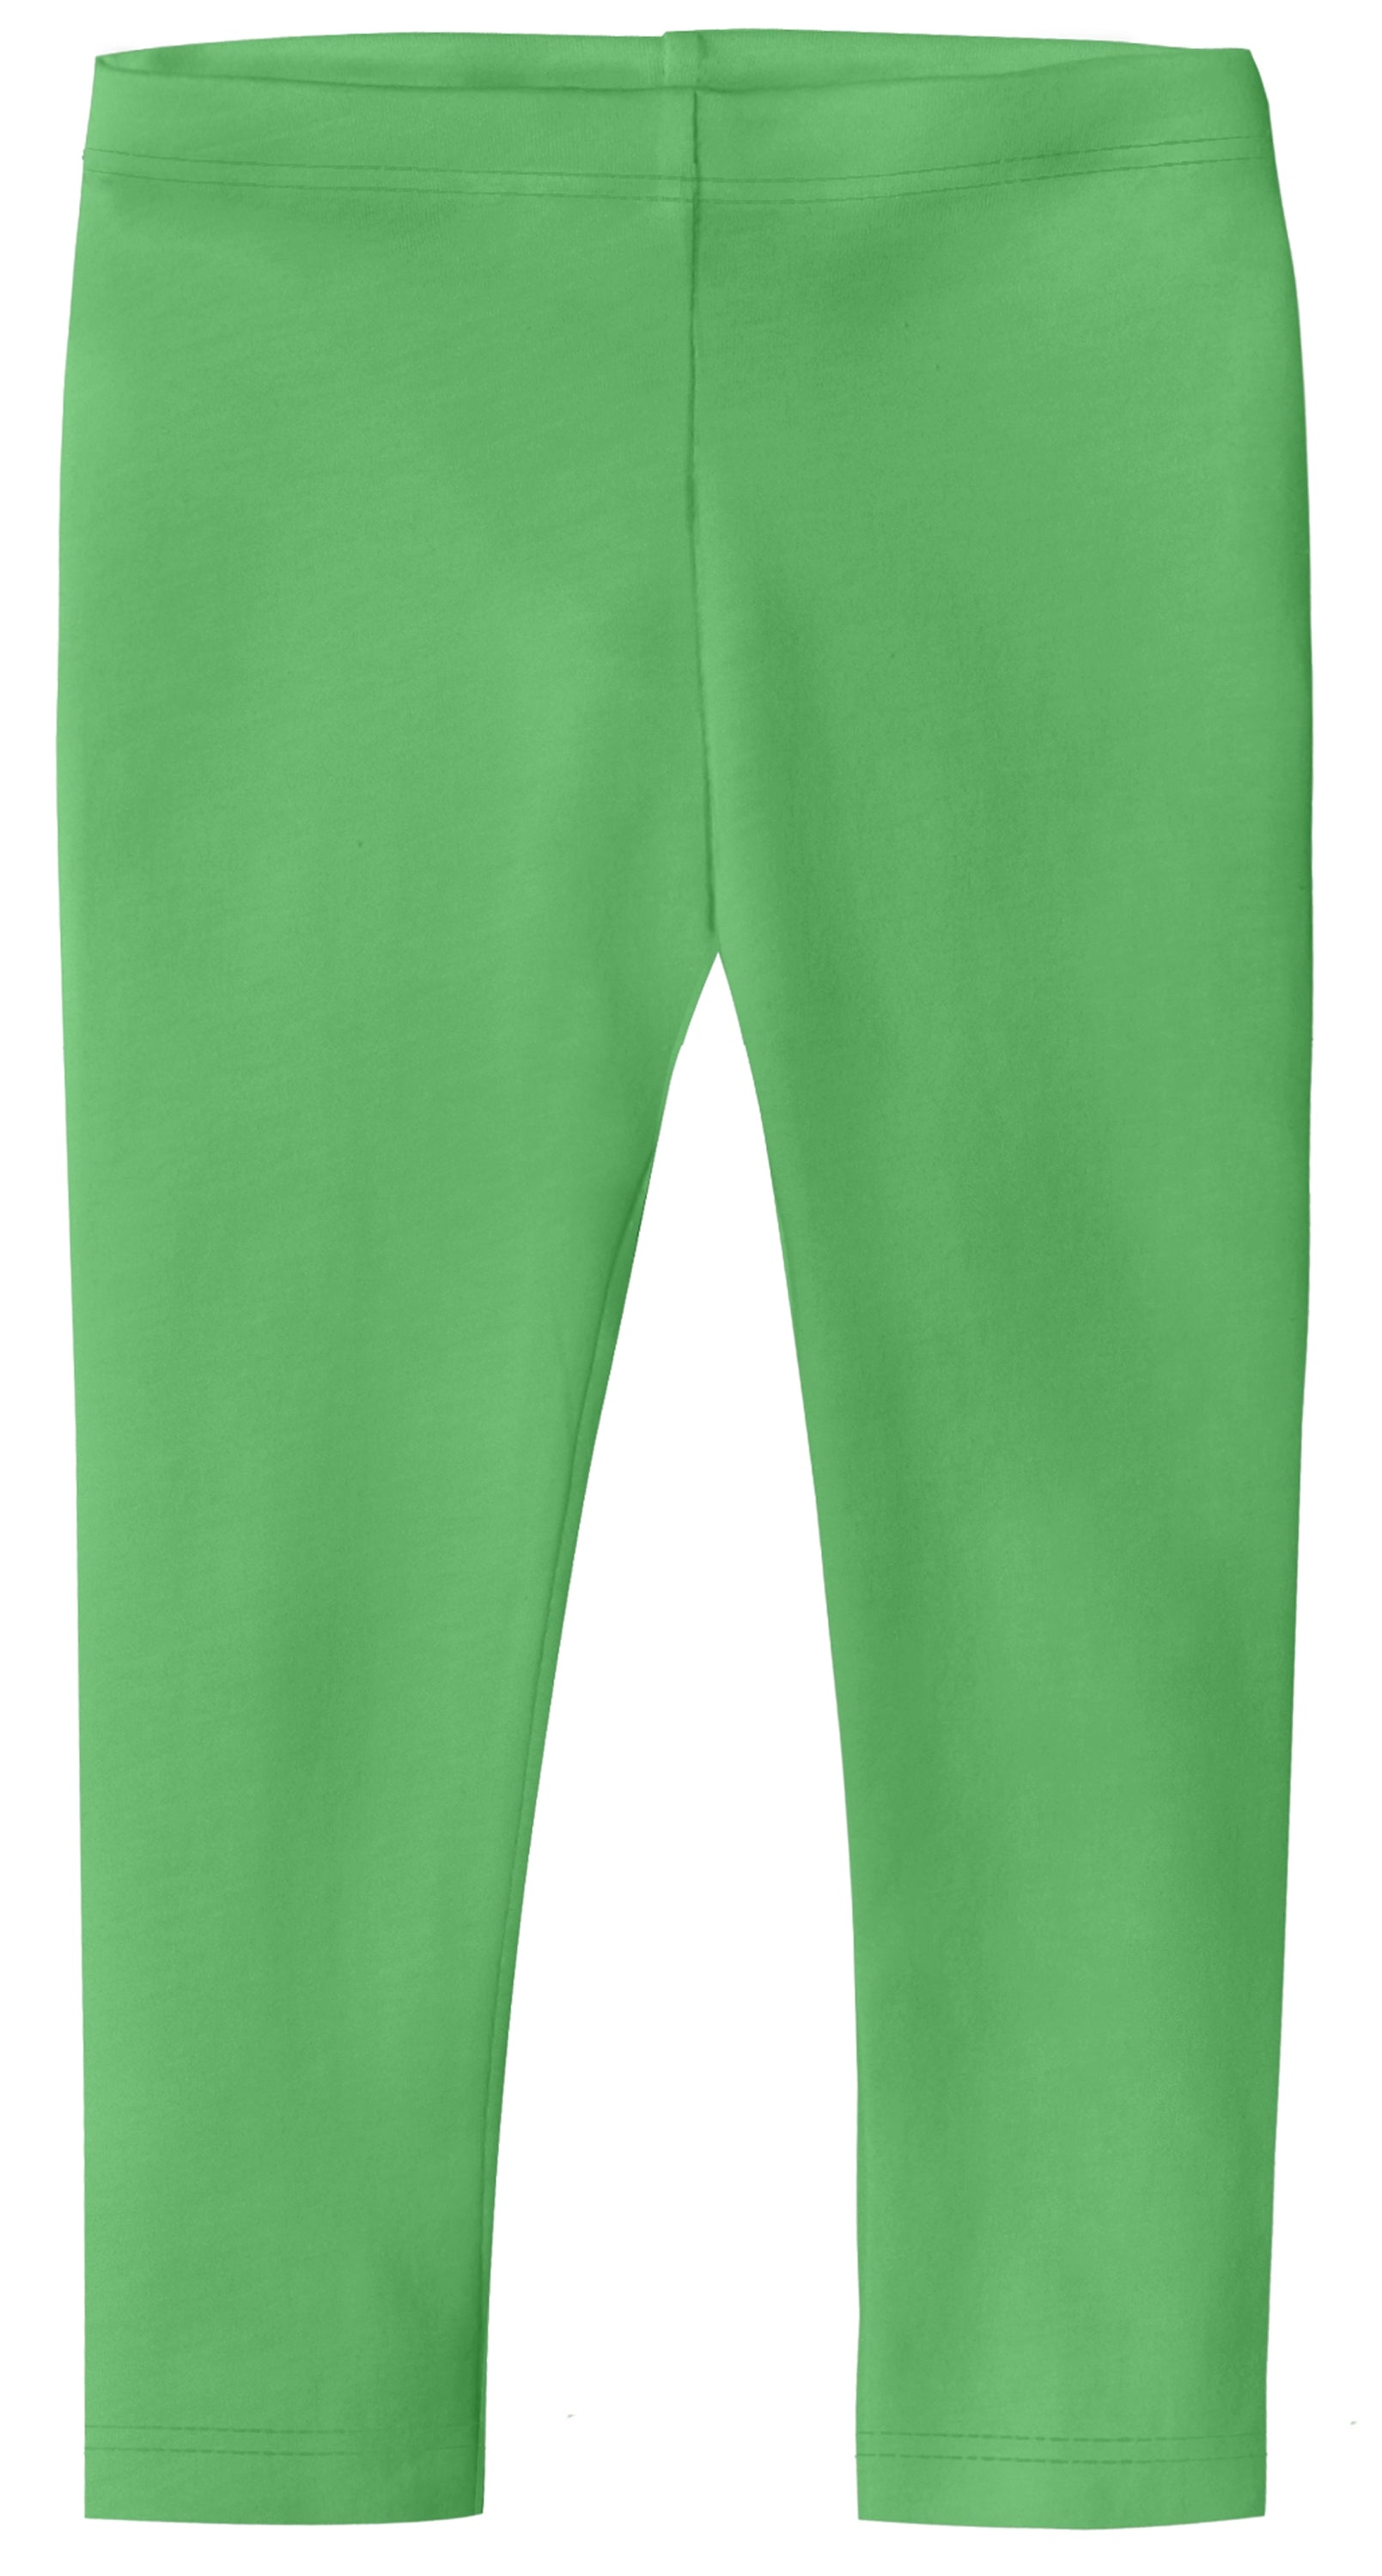 Hey Nuts Essential capri army green leggings size 8/10 M